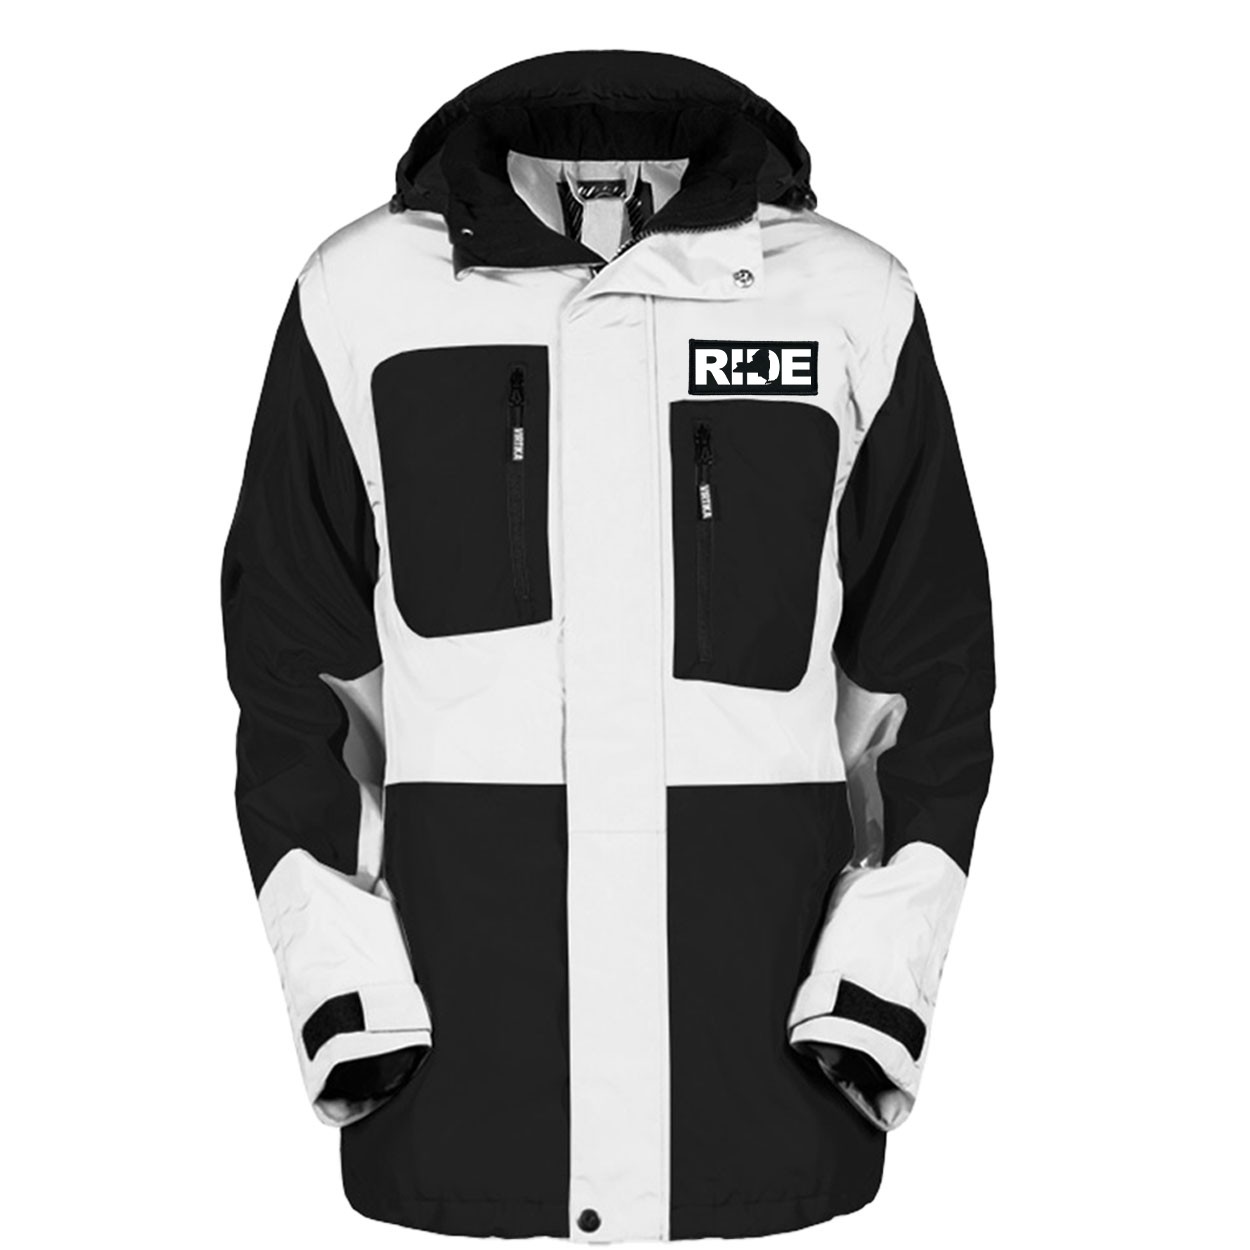 Ride New York Pro Waterproof Breathable Winter Virtika Jacket Black/White (White Logo)